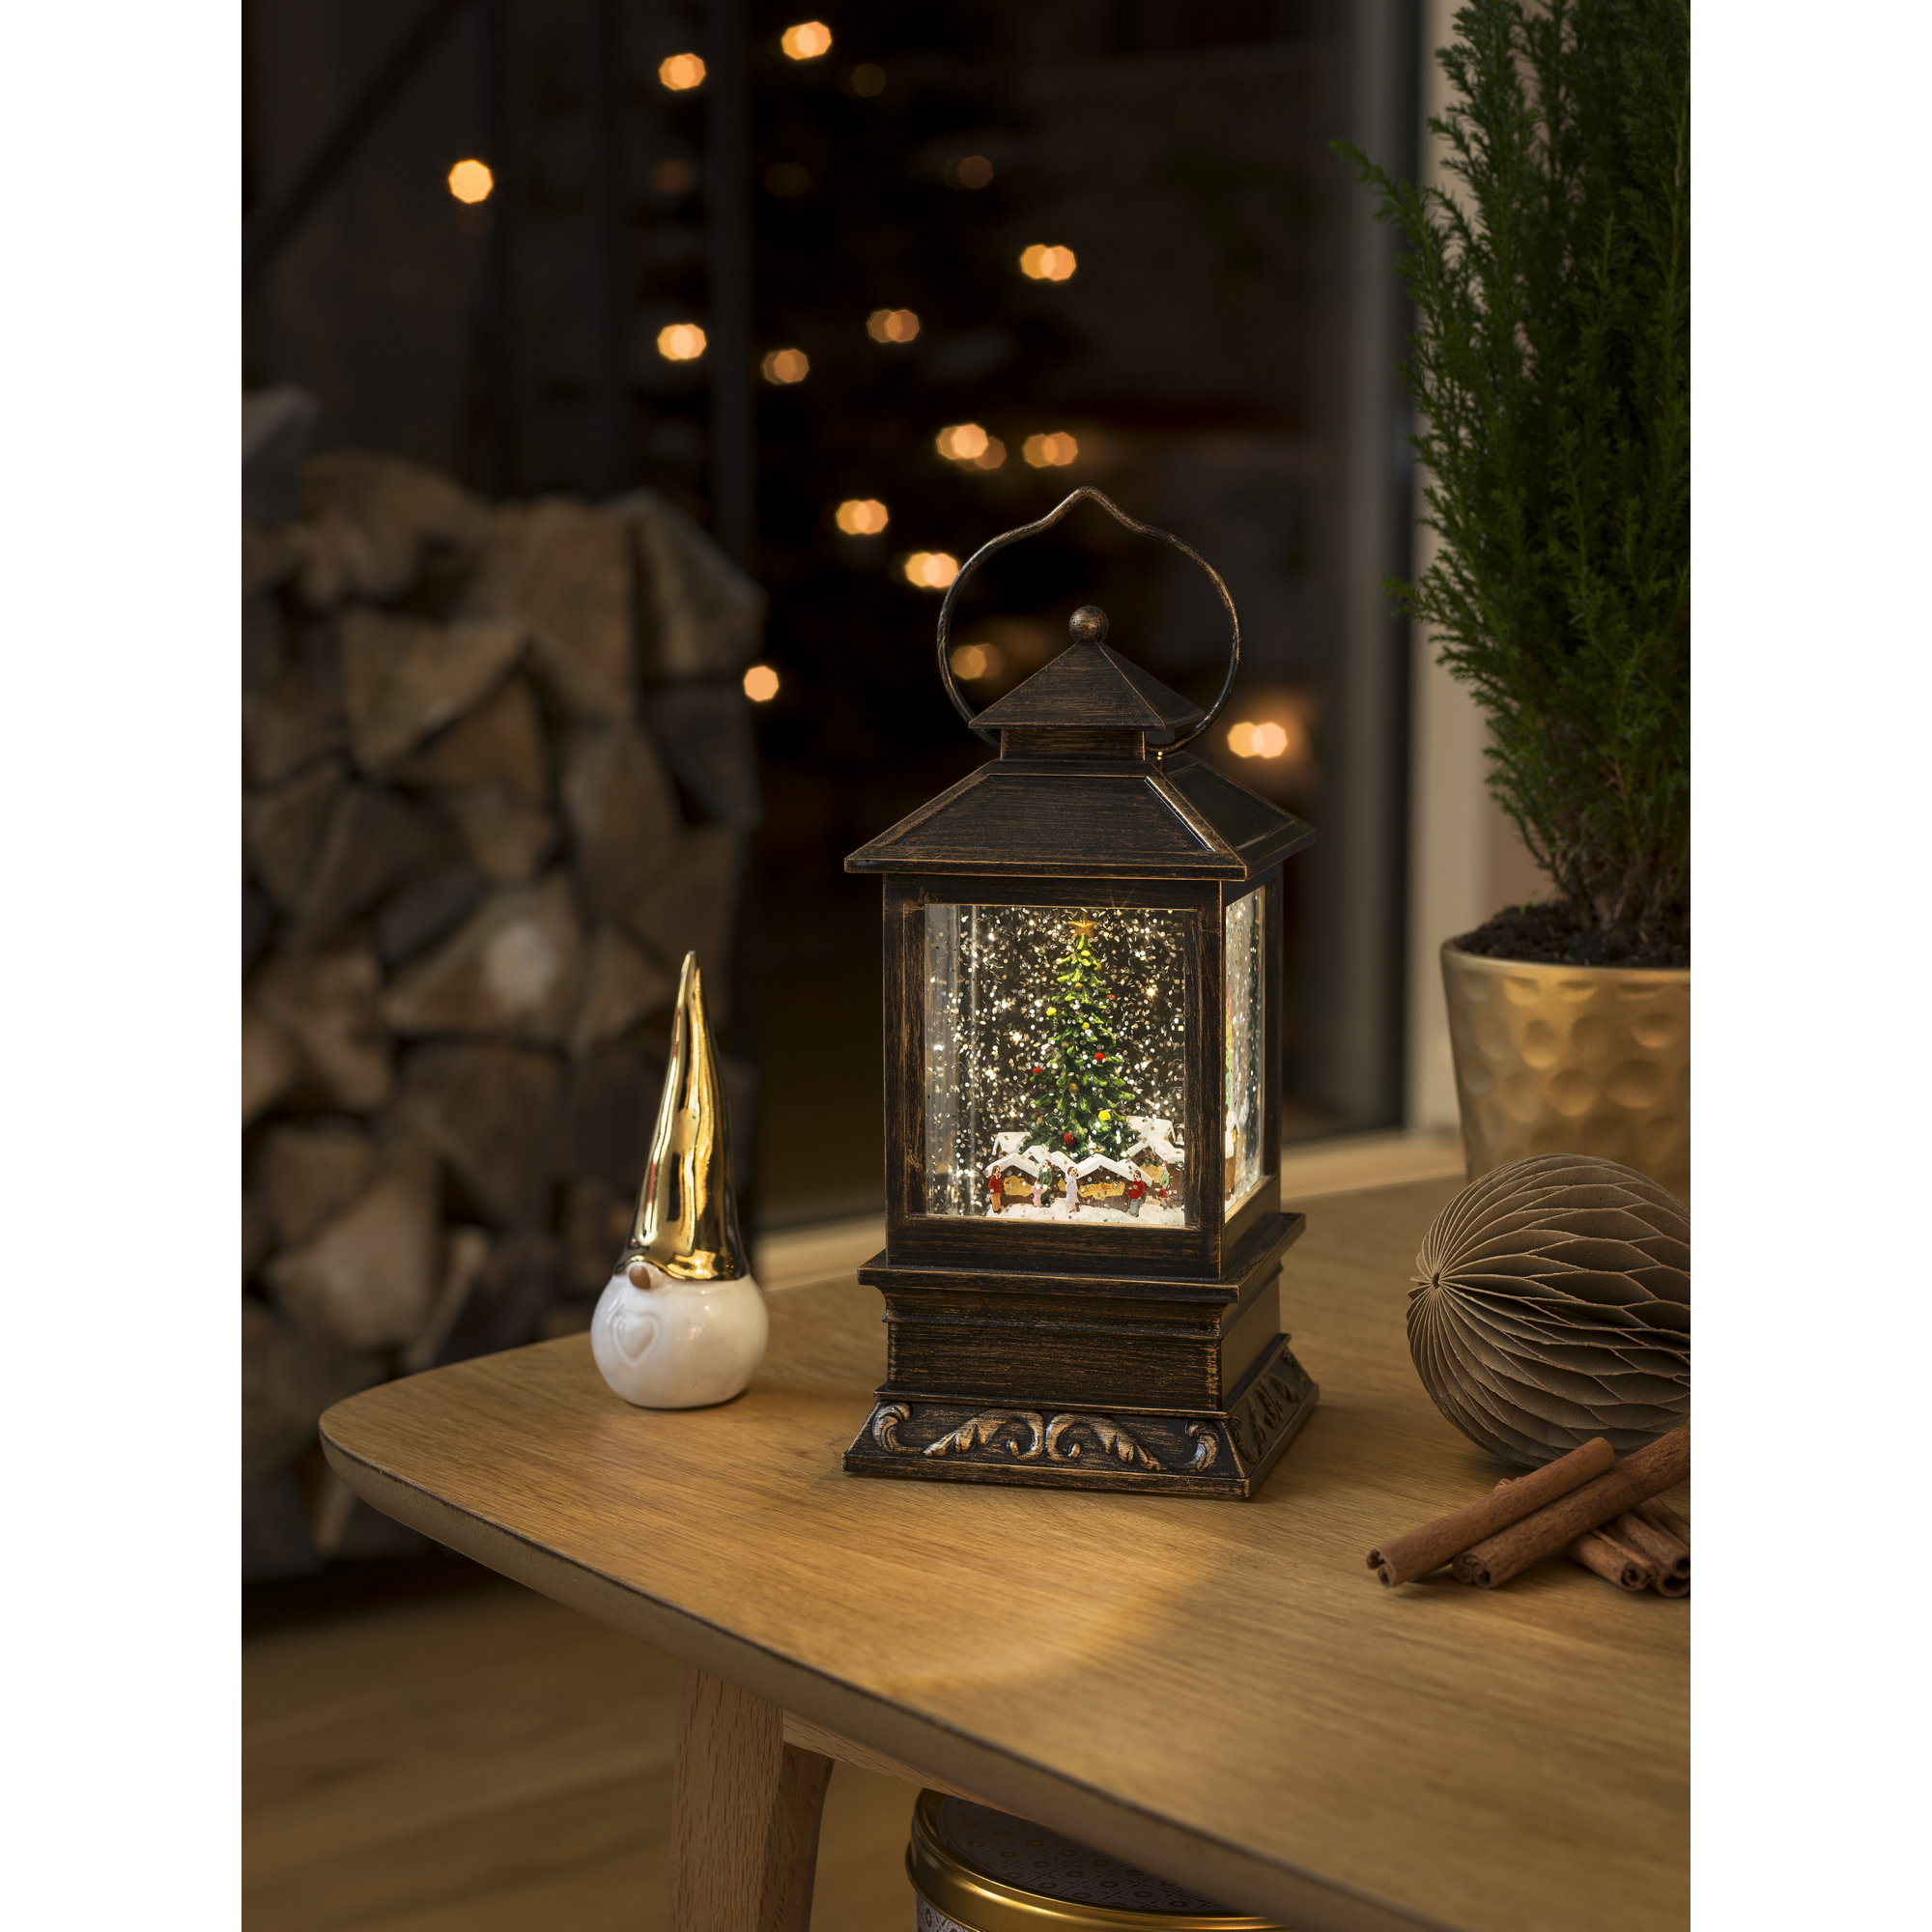 LED-Wasserlaterne 'Weihnachtsmarkt' 1 LED warmweiß 10,5 x 22 cm + product picture